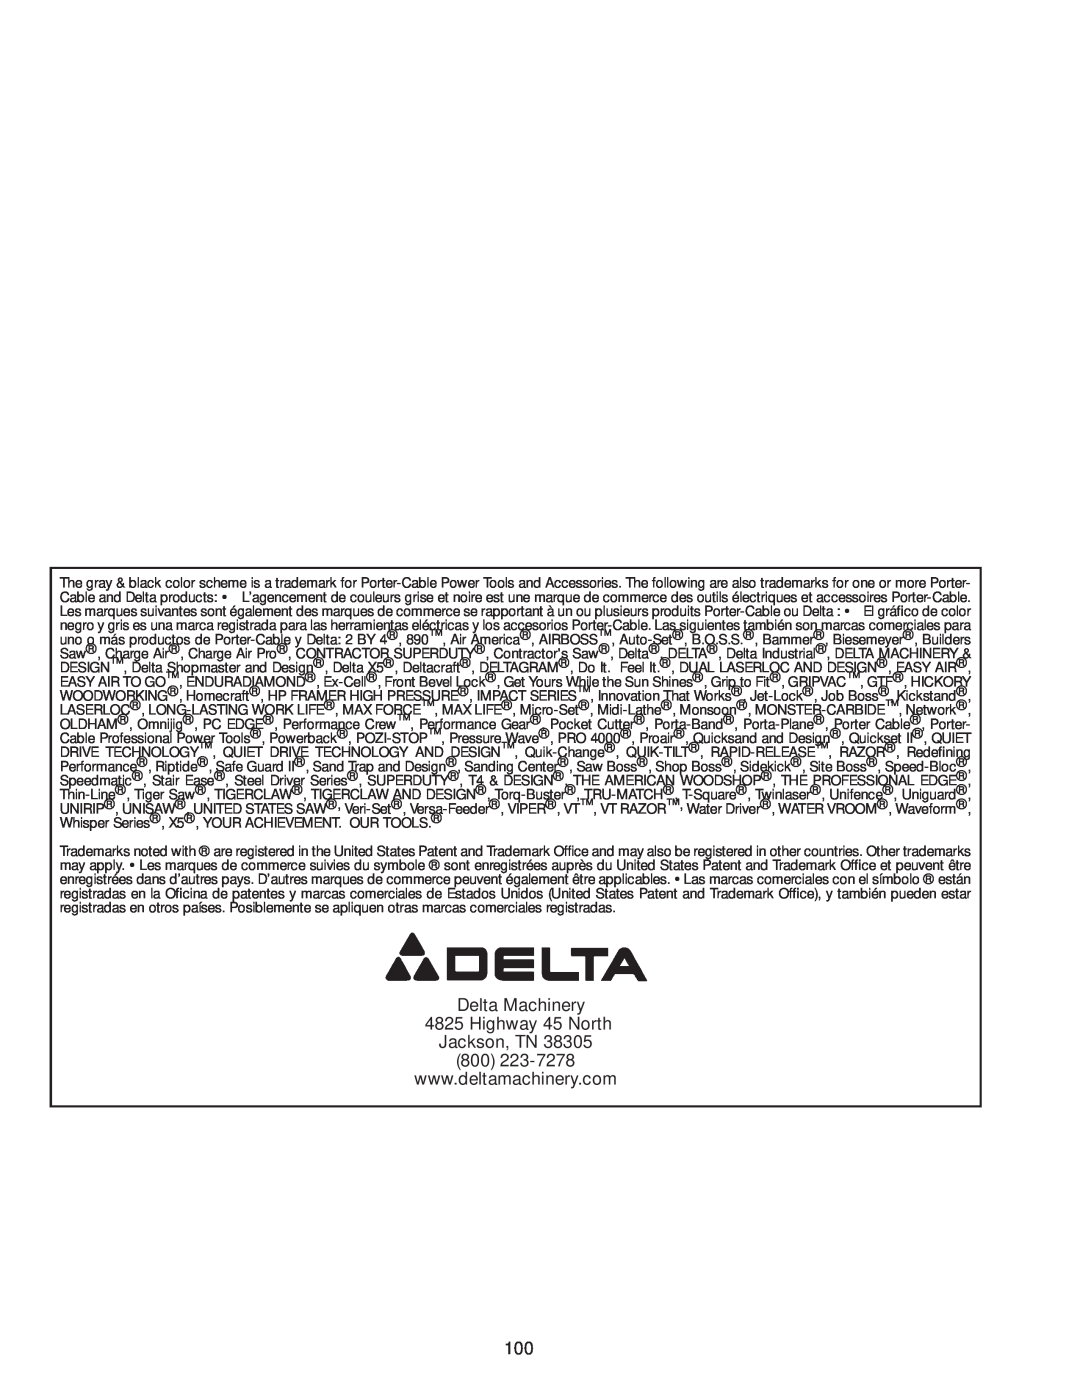 Delta 36-979, 36-978 instruction manual Delta Machinery 4825 Highway 45 North Jackson, TN 800 